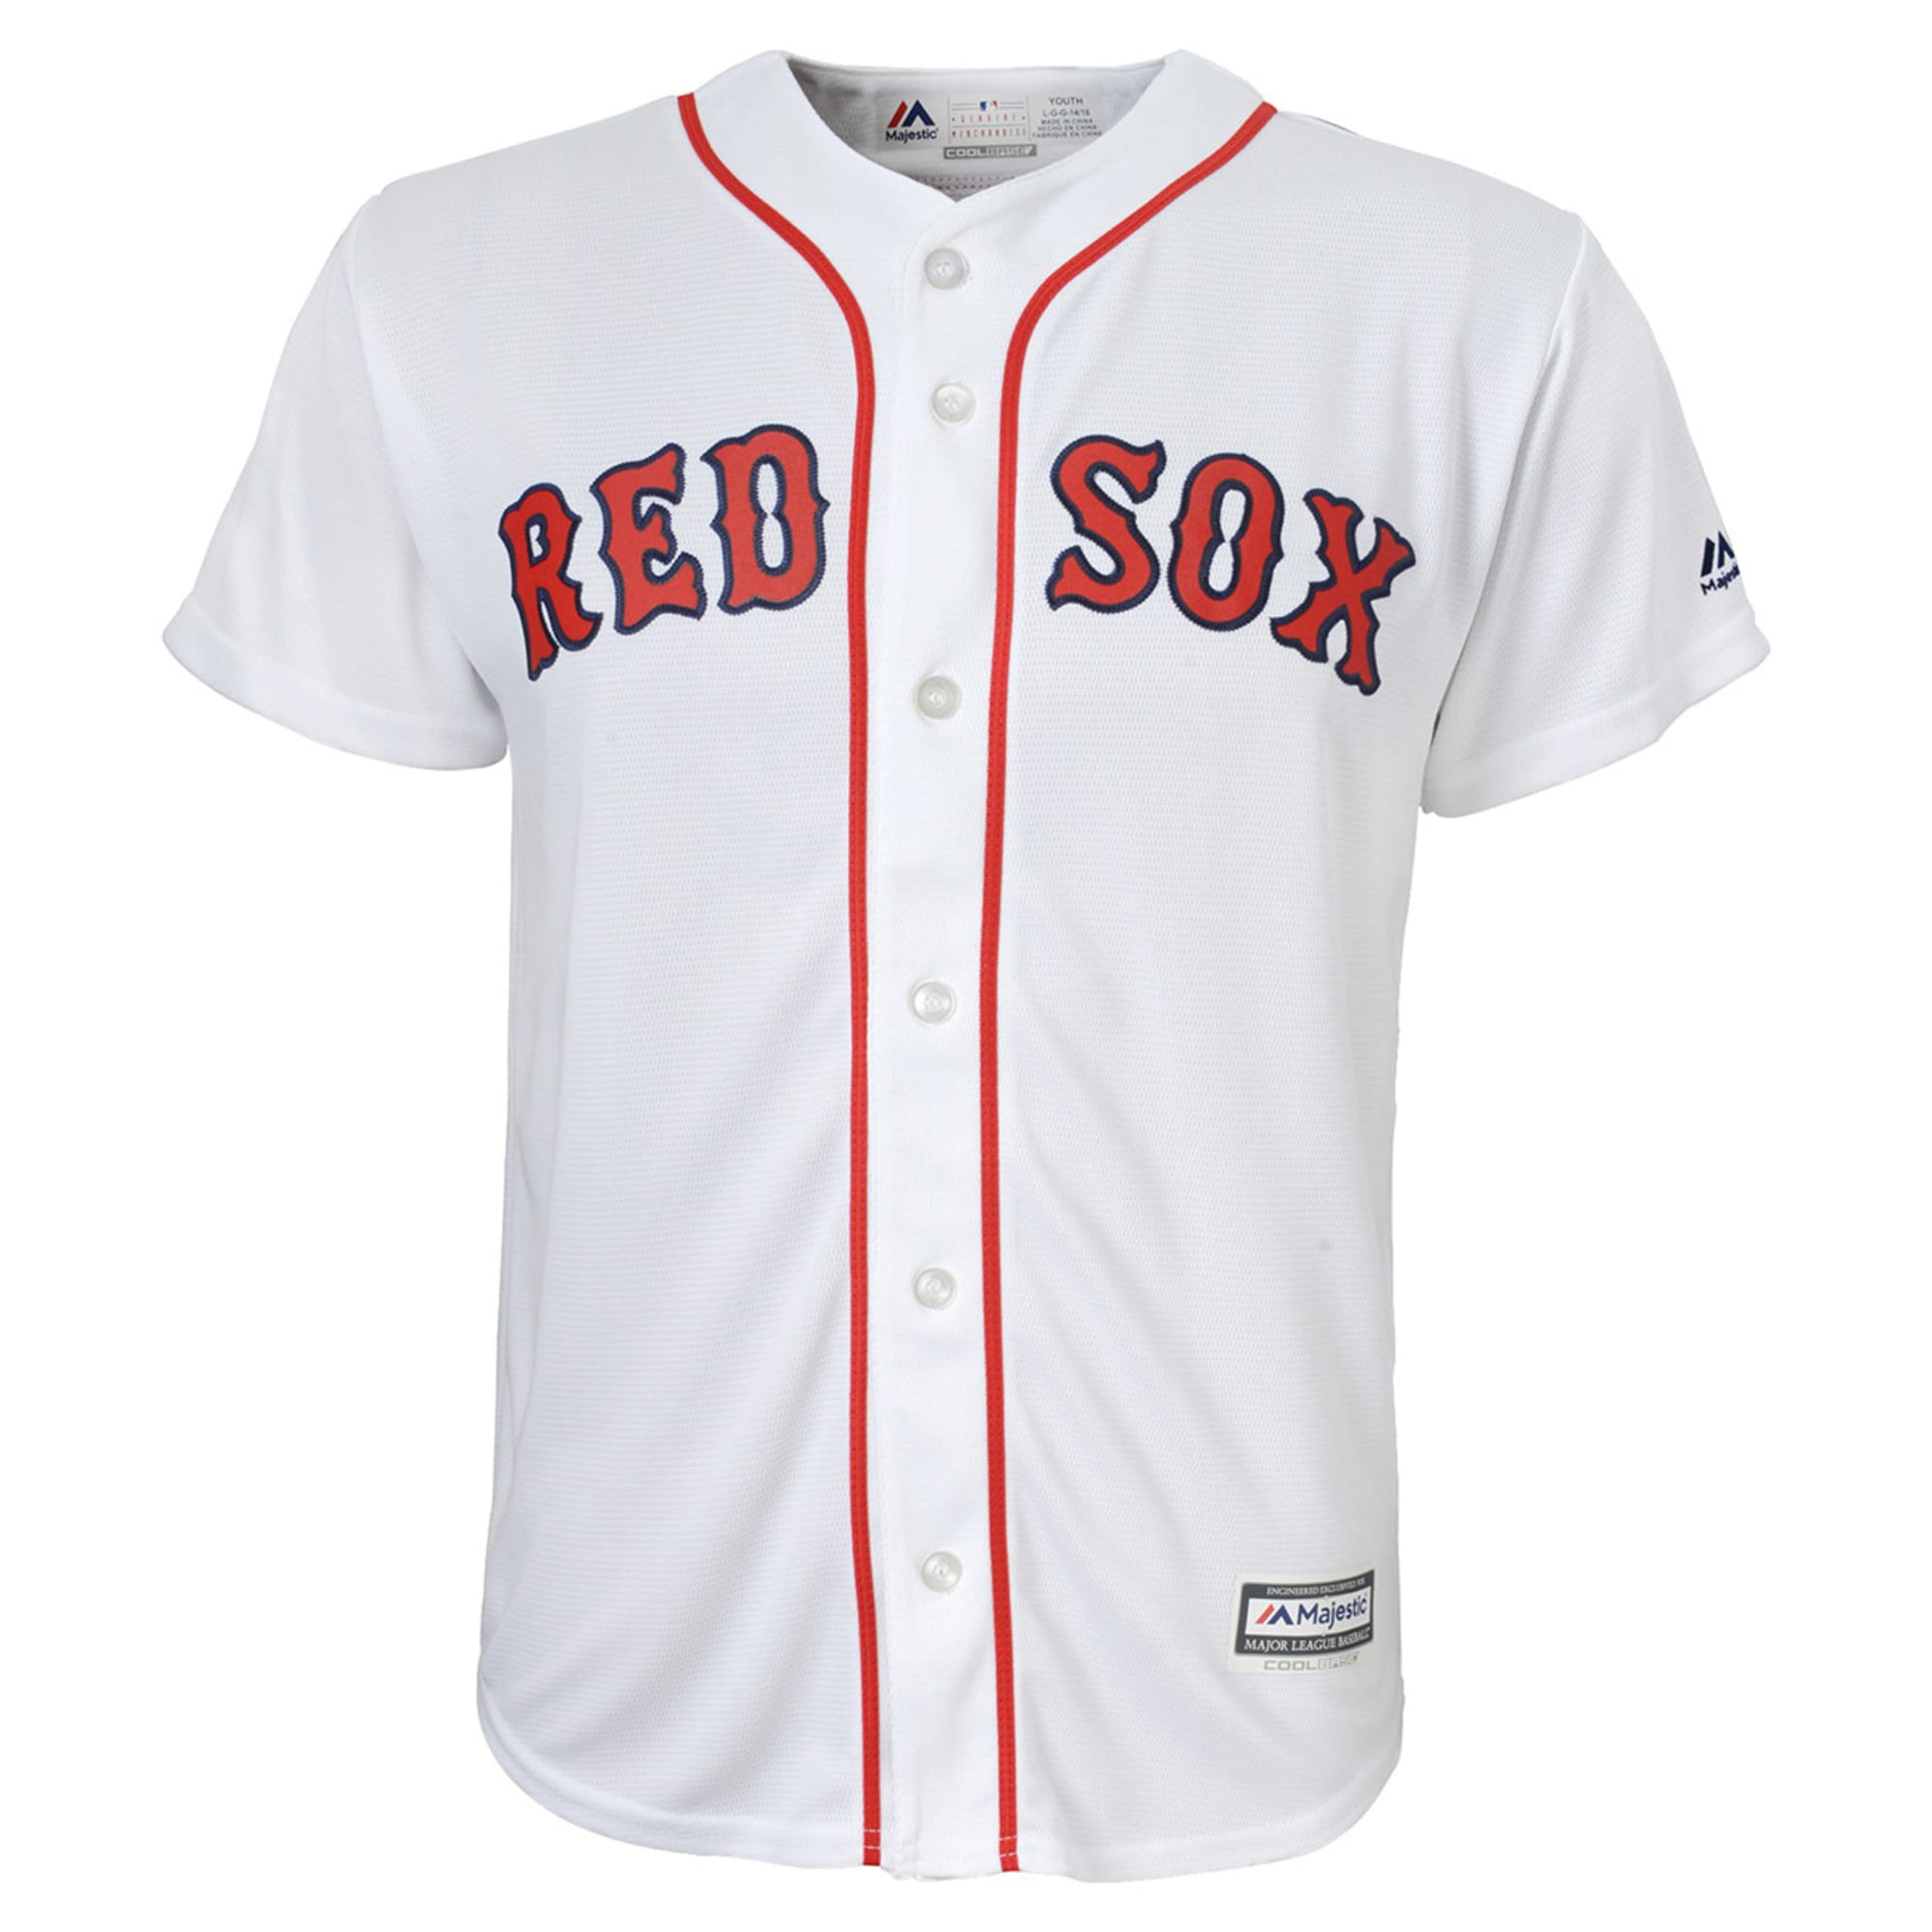 Manny Ramirez Boston Red Sox jersey youth medium